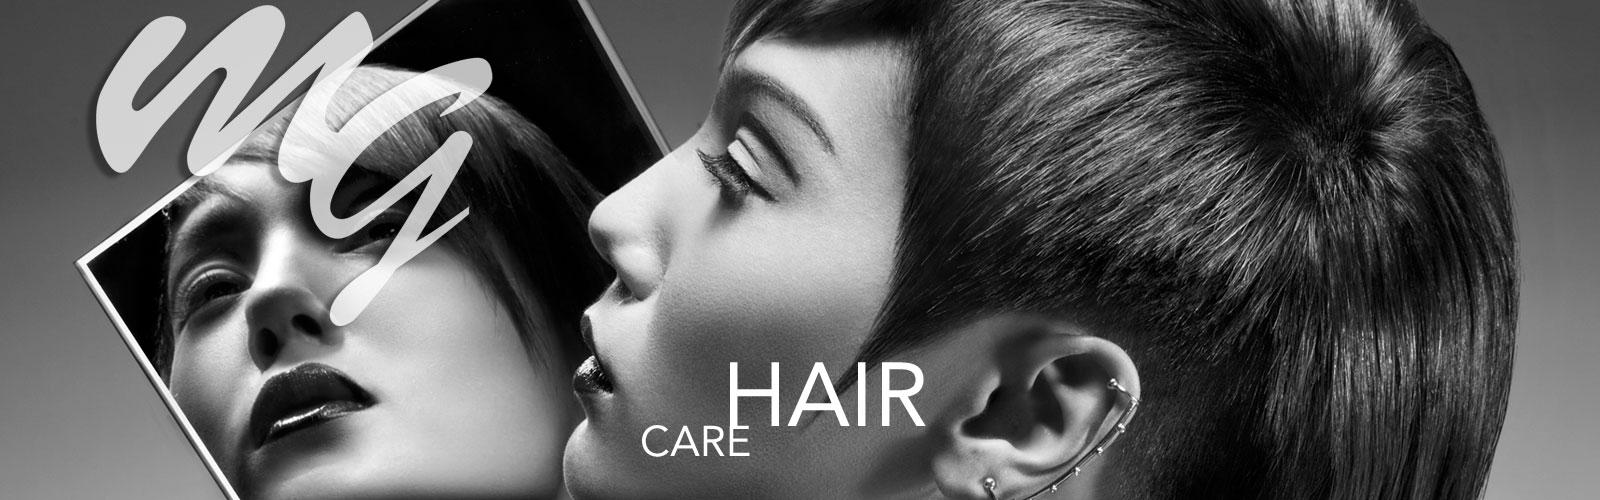 header_haircare.jpg